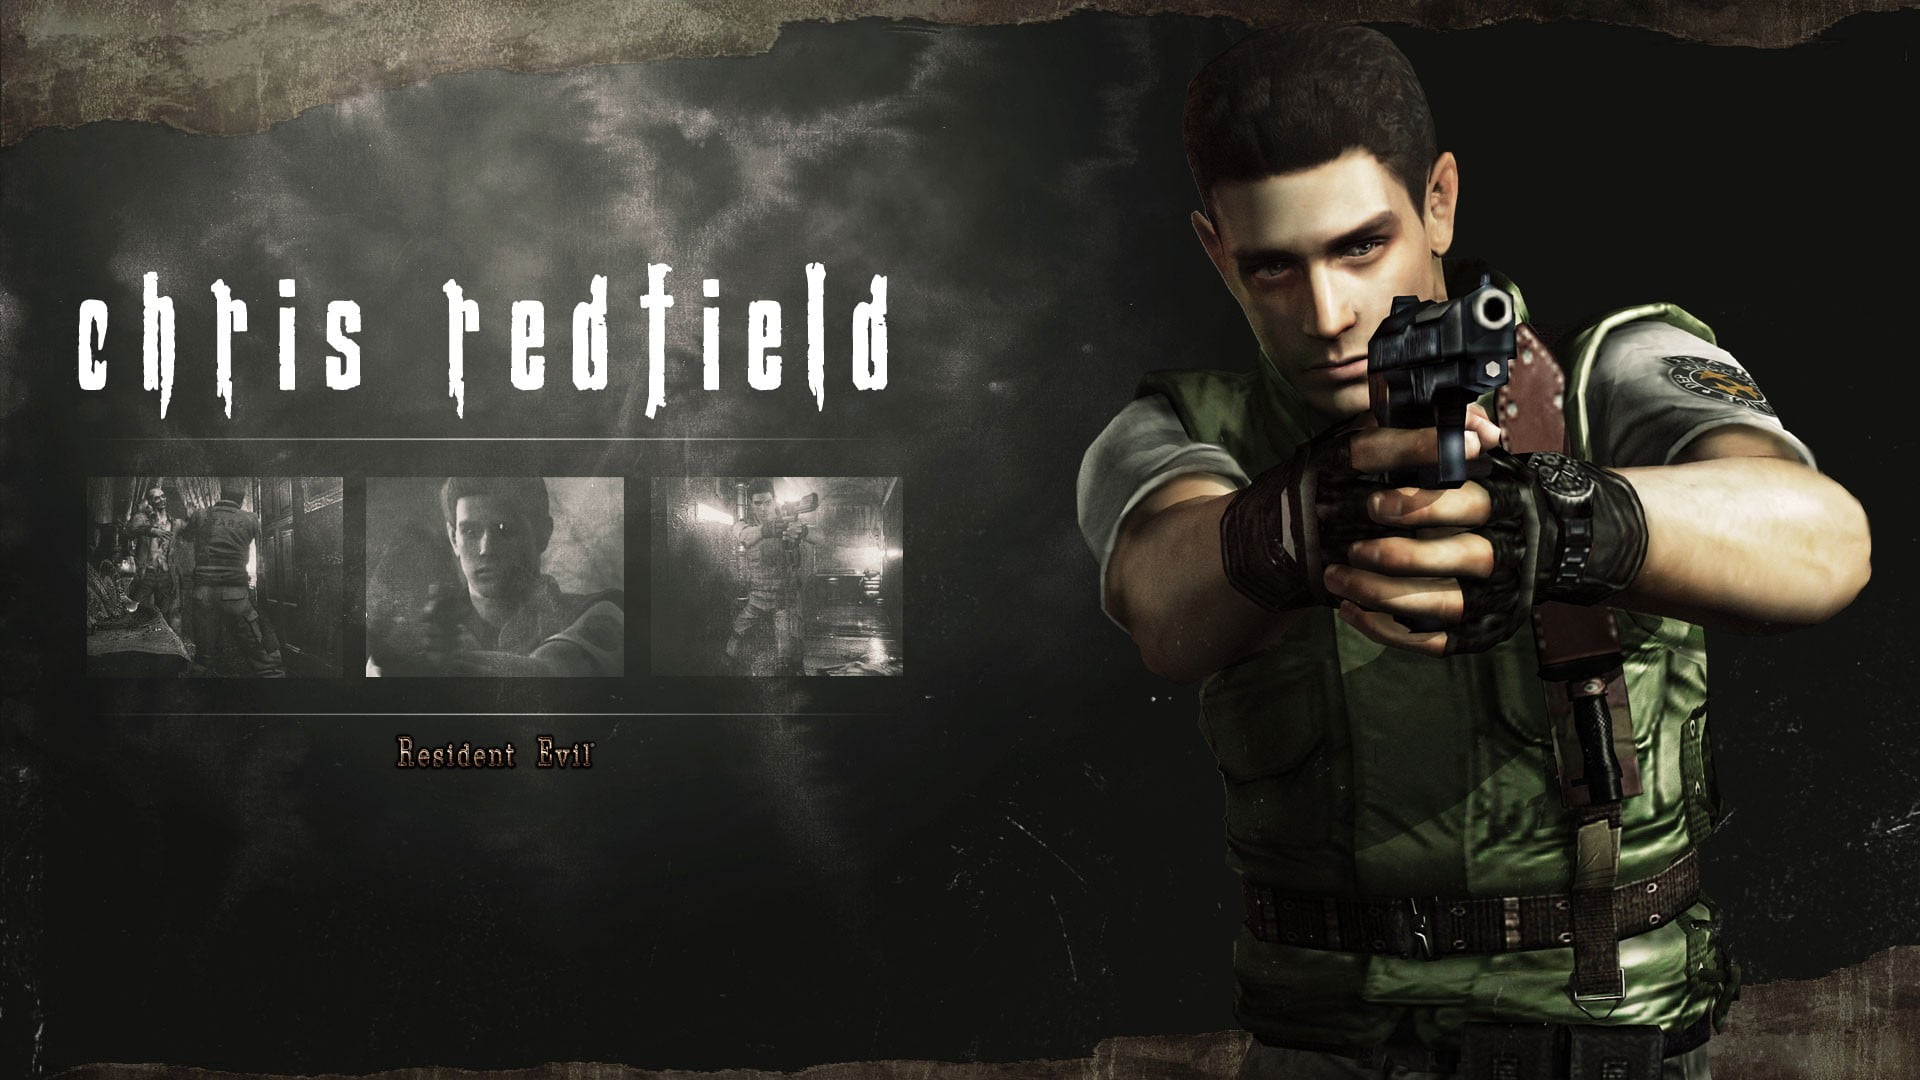 Resident Evil Hd Remaster Chris Redfield - HD Wallpaper 